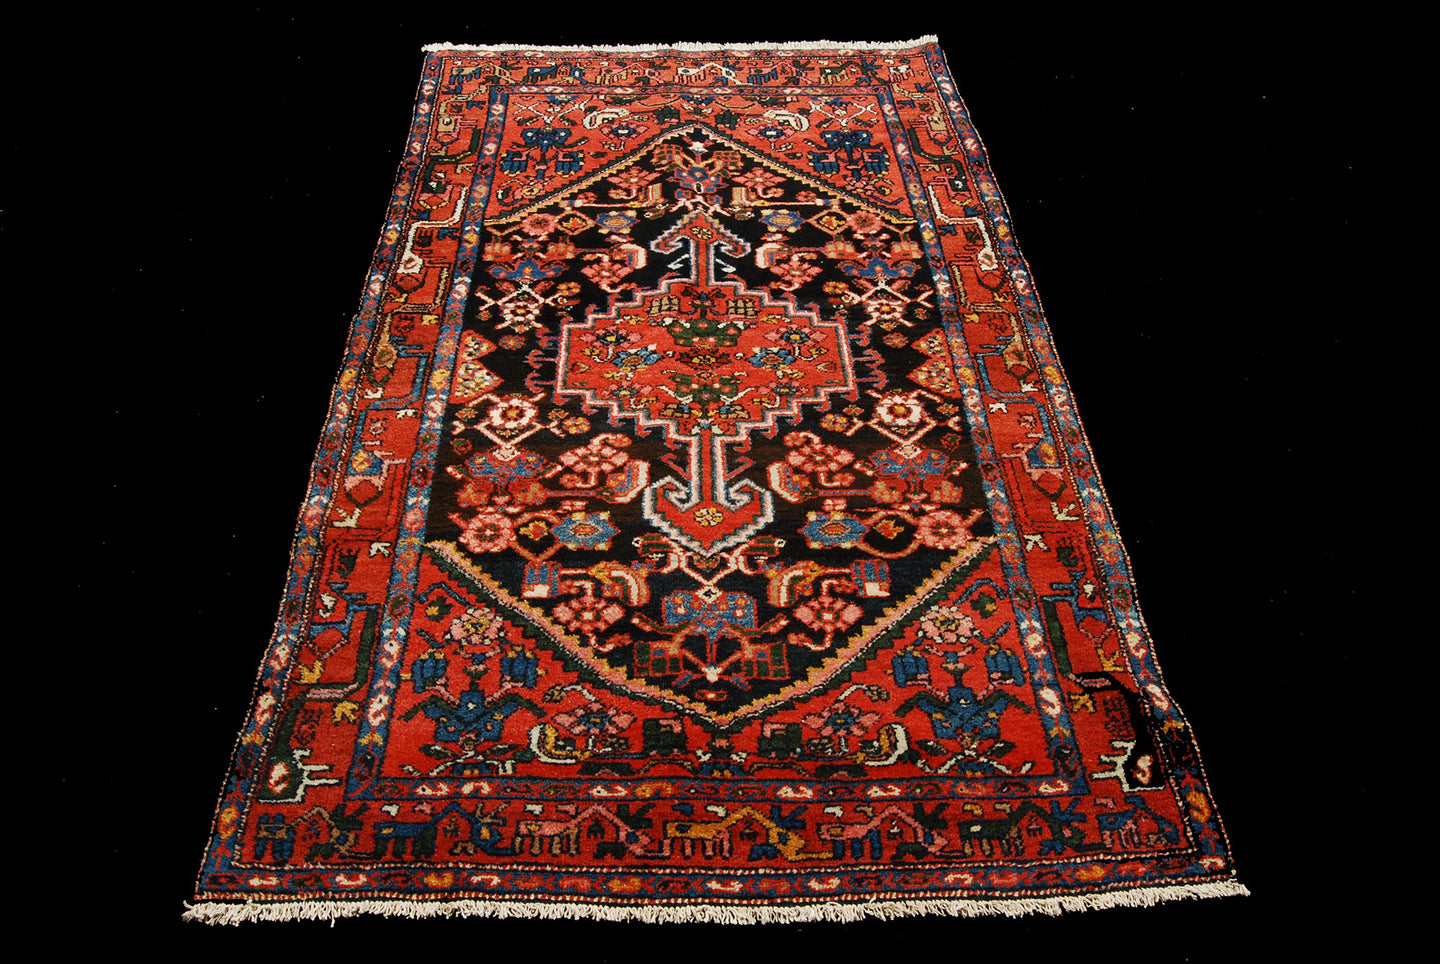 Authentic original hand knotted carpet 185x115 CM